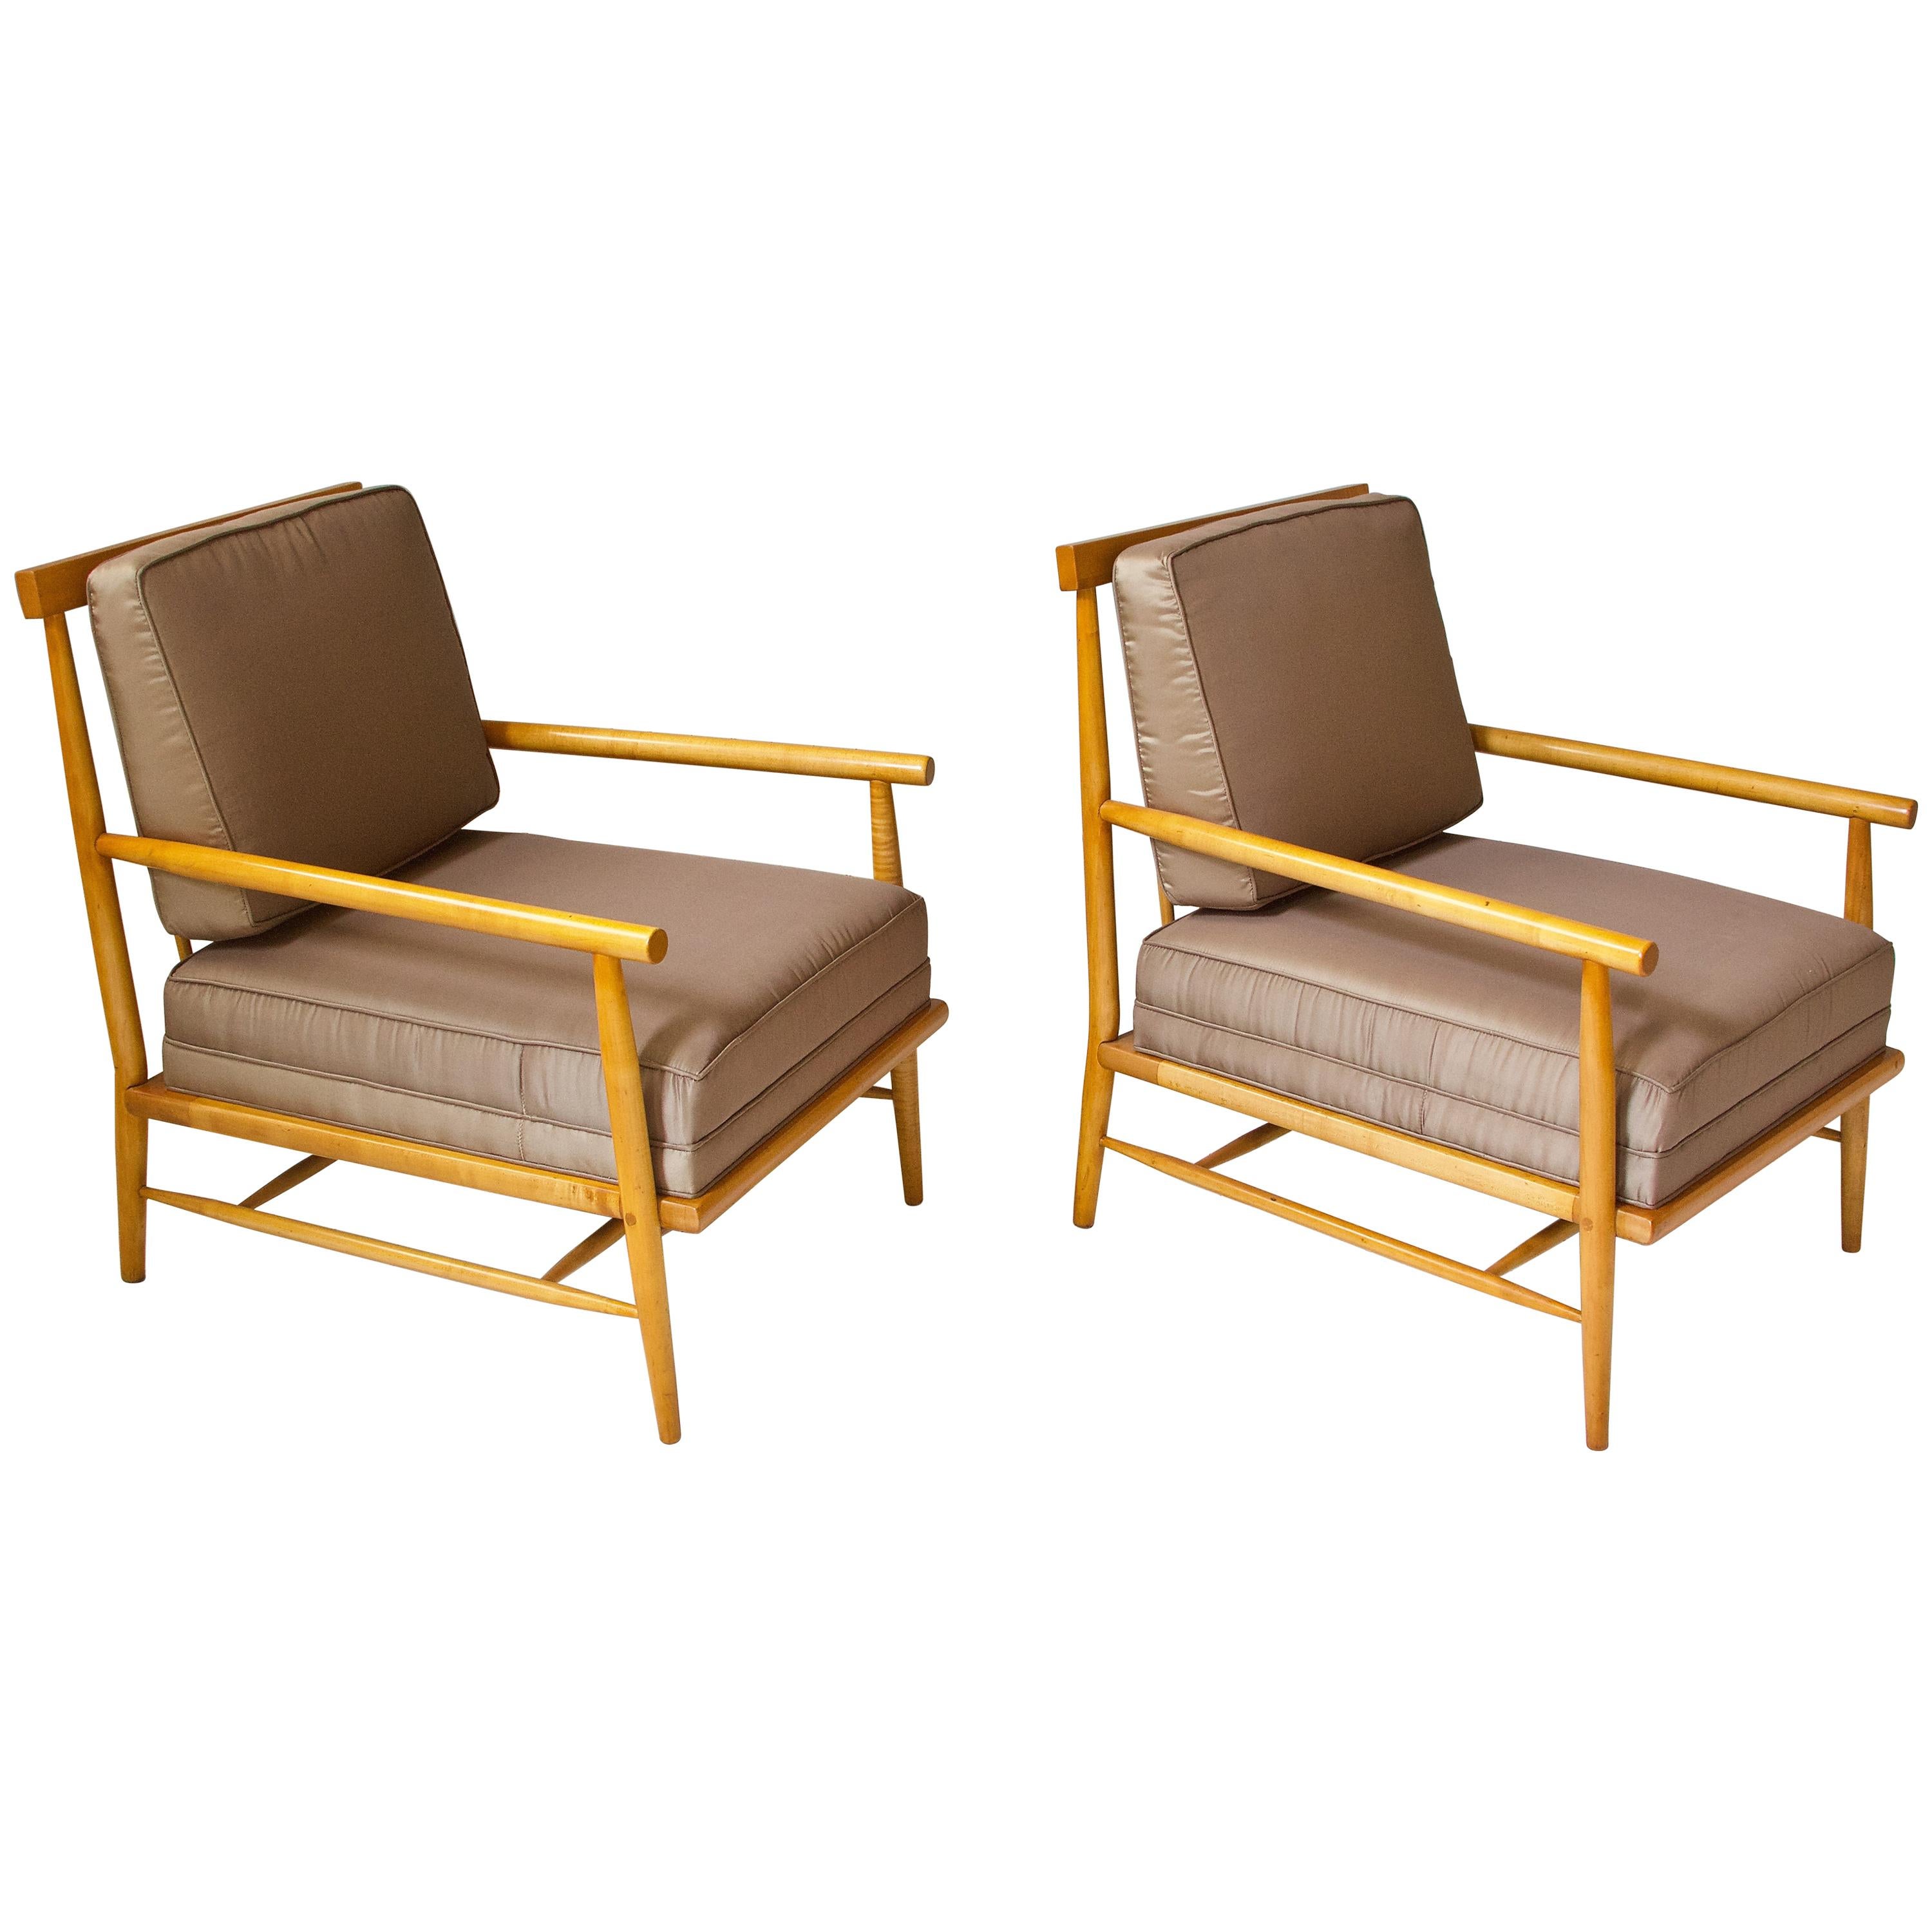 Pair of Rare Paul McCobb Predictor Group Lounge Chairs by O'Hearn, 1951-1955